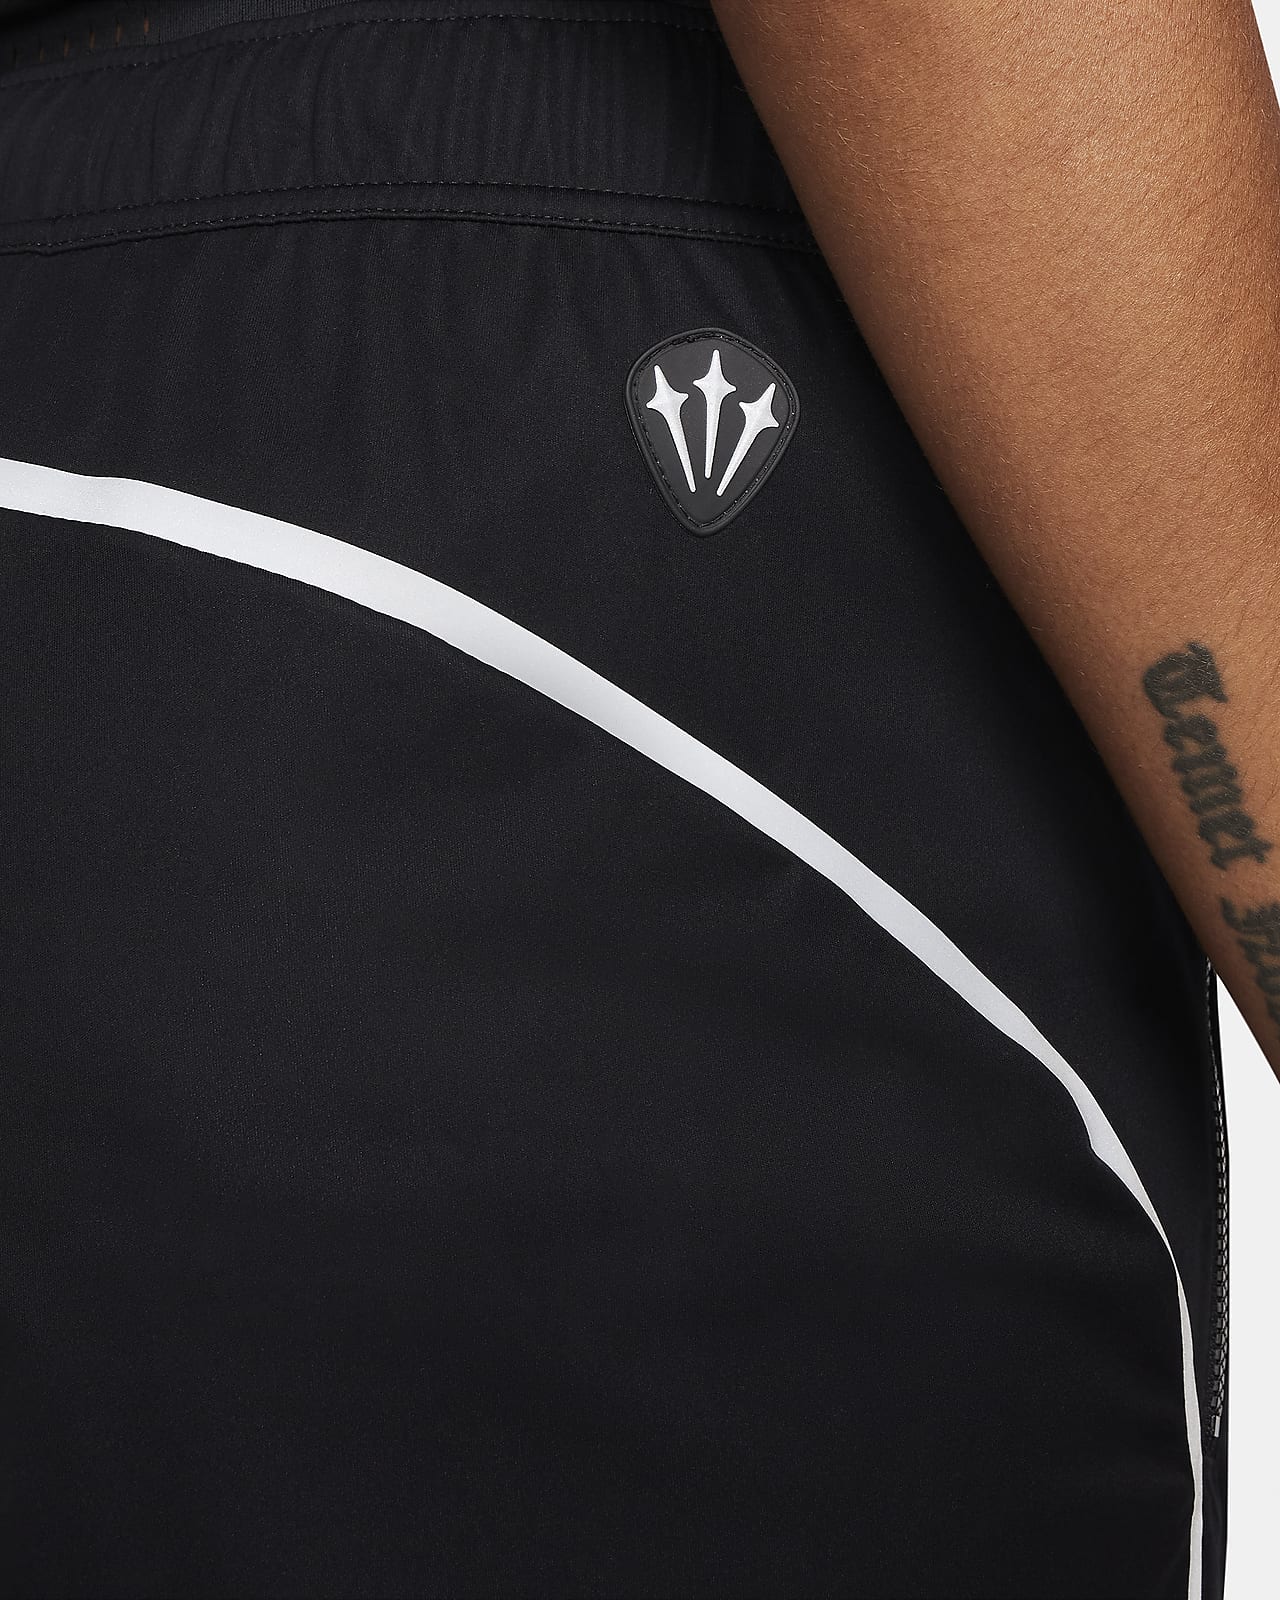 NOCTA Men's Warm-Up Trousers. Nike CA